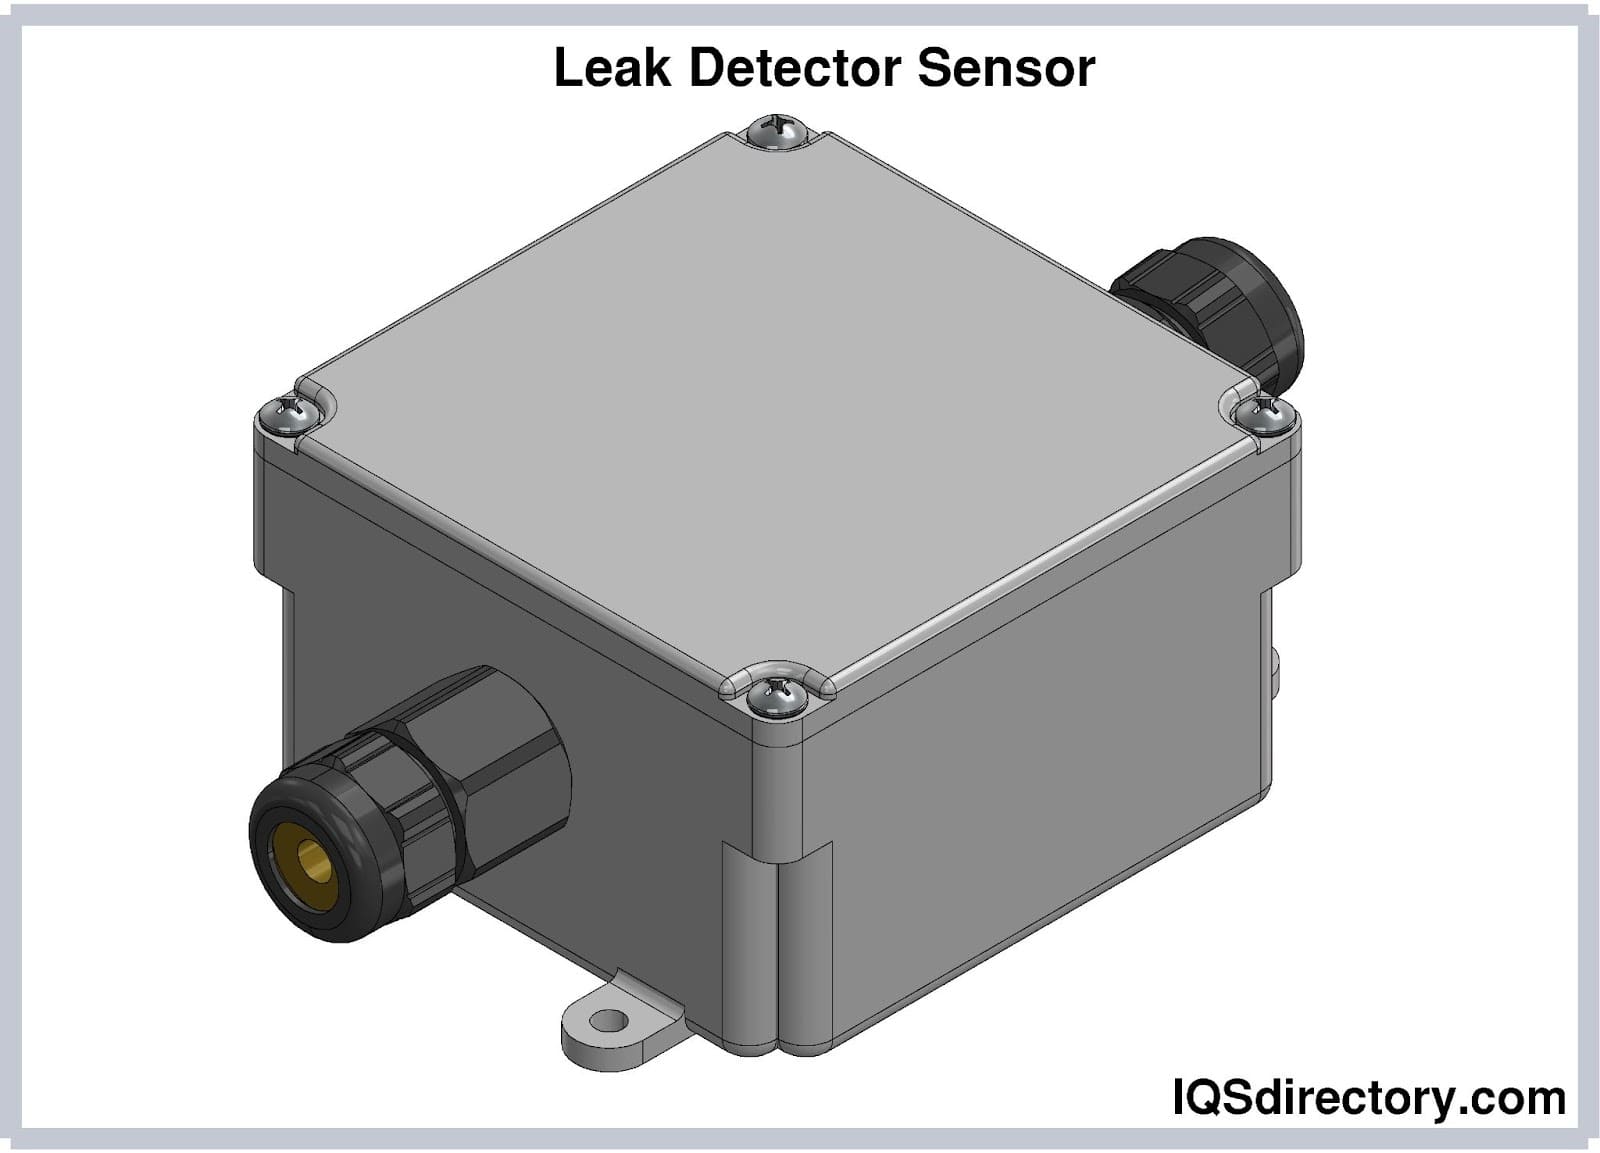 https://www.iqsdirectory.com/articles/leak-detectors/leak-detector-sensor.jpg